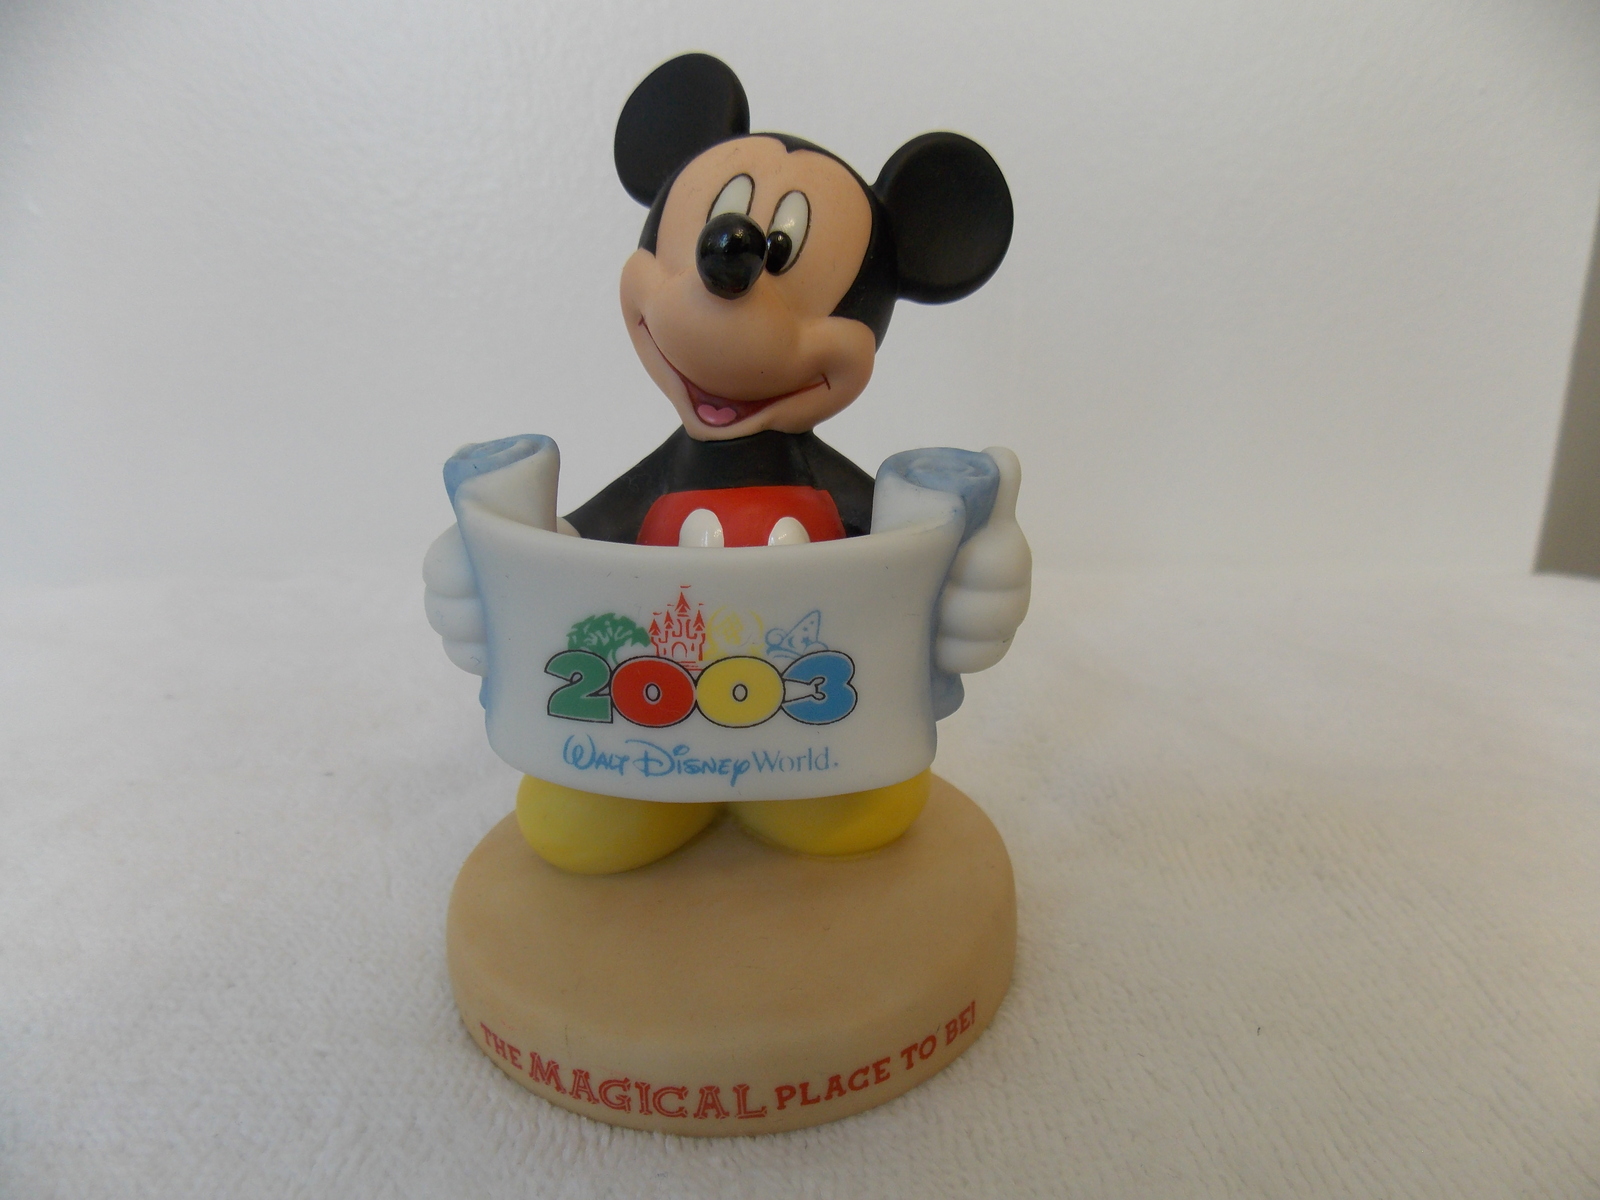 2003 Walt Disney World Mickey Mouse Figurine  - $25.00